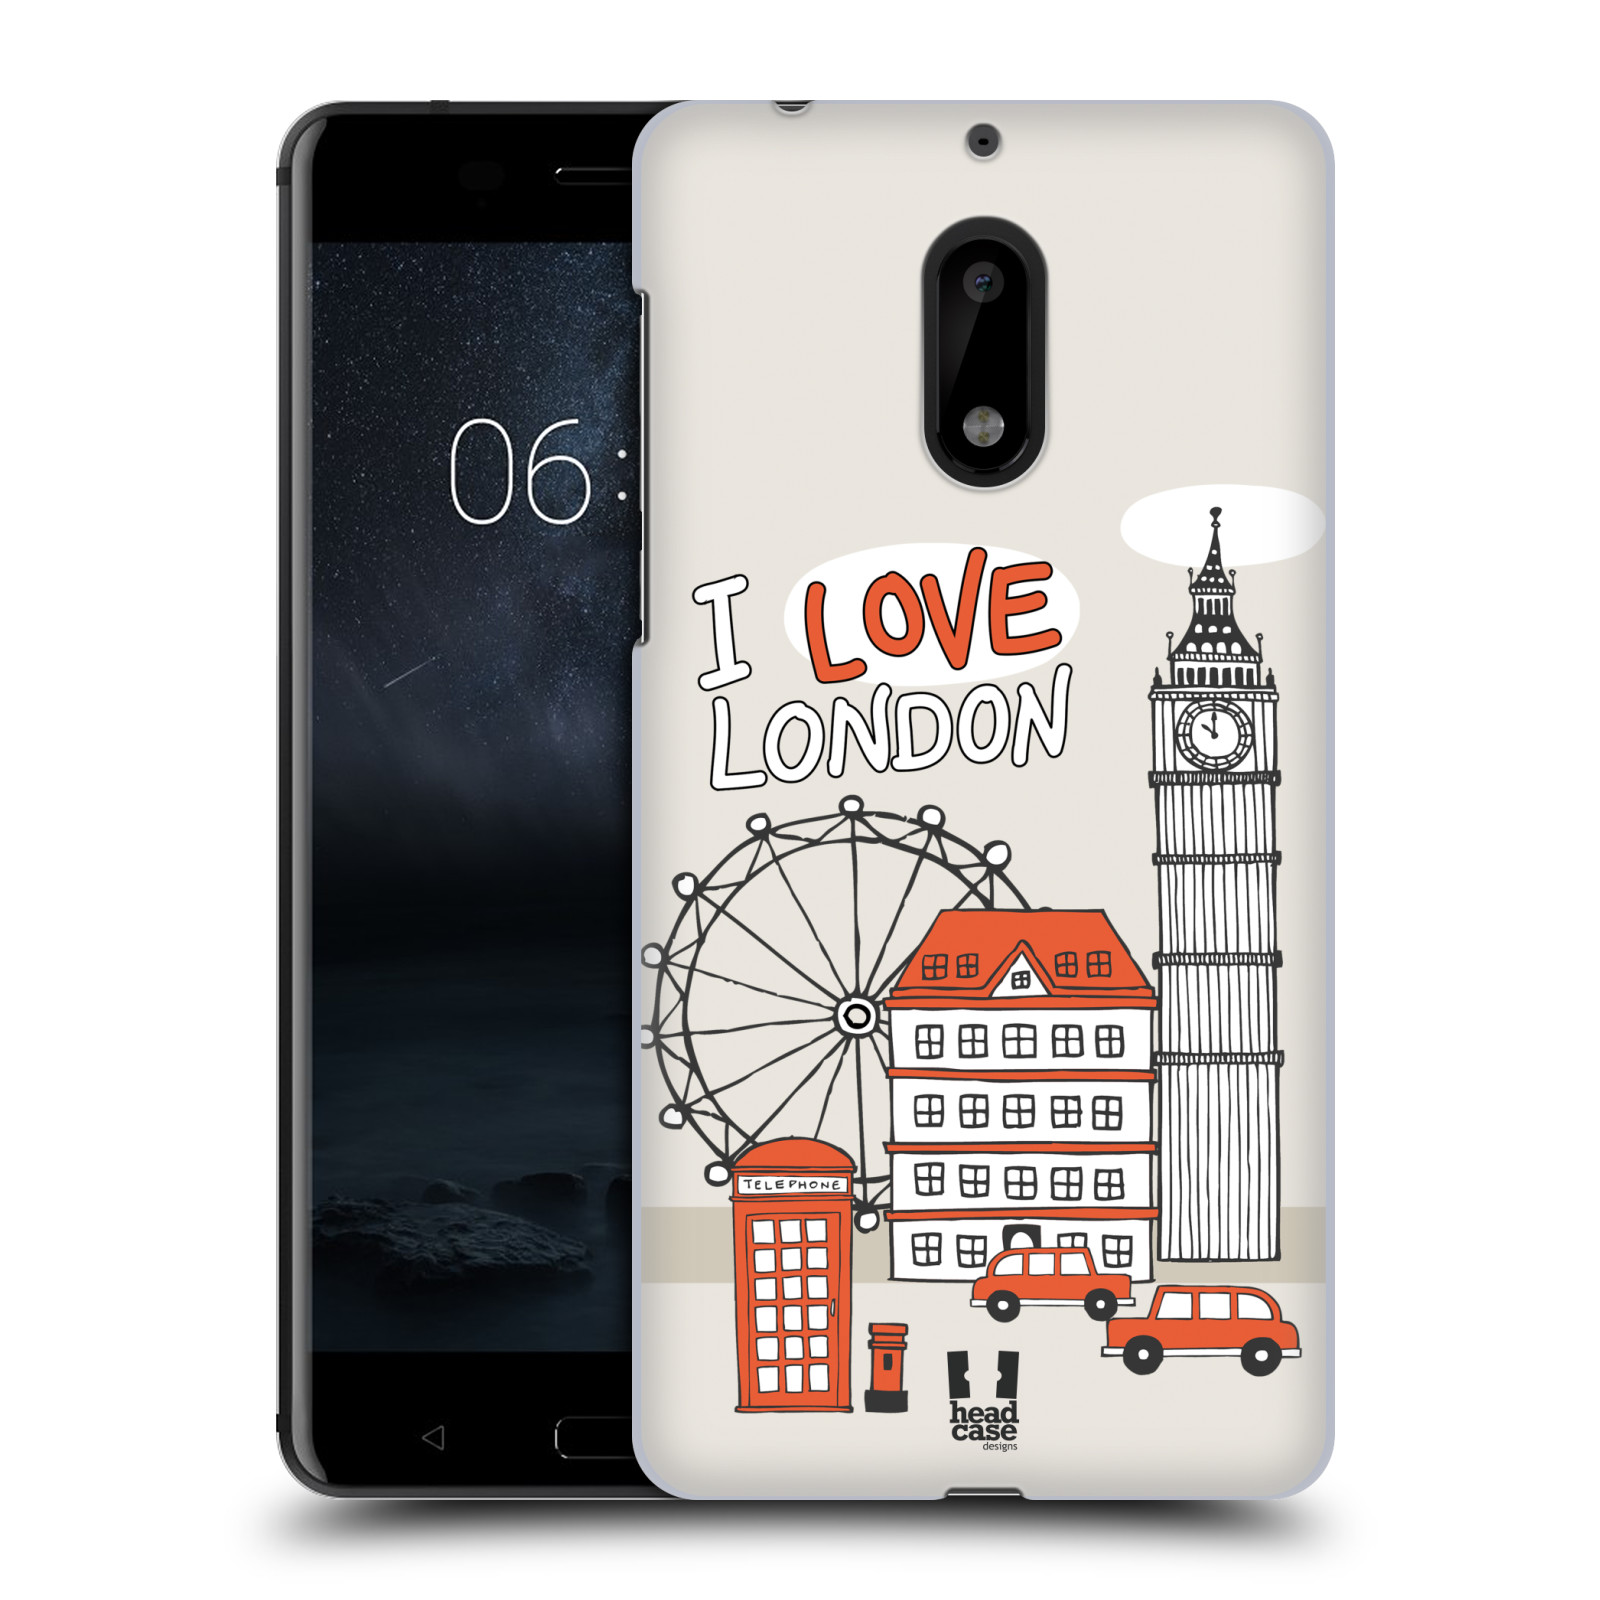 HEAD CASE plastový obal na mobil Nokia 6 vzor Kreslená městečka ČERVENÁ, Anglie, Londýn, I LOVE LONDON